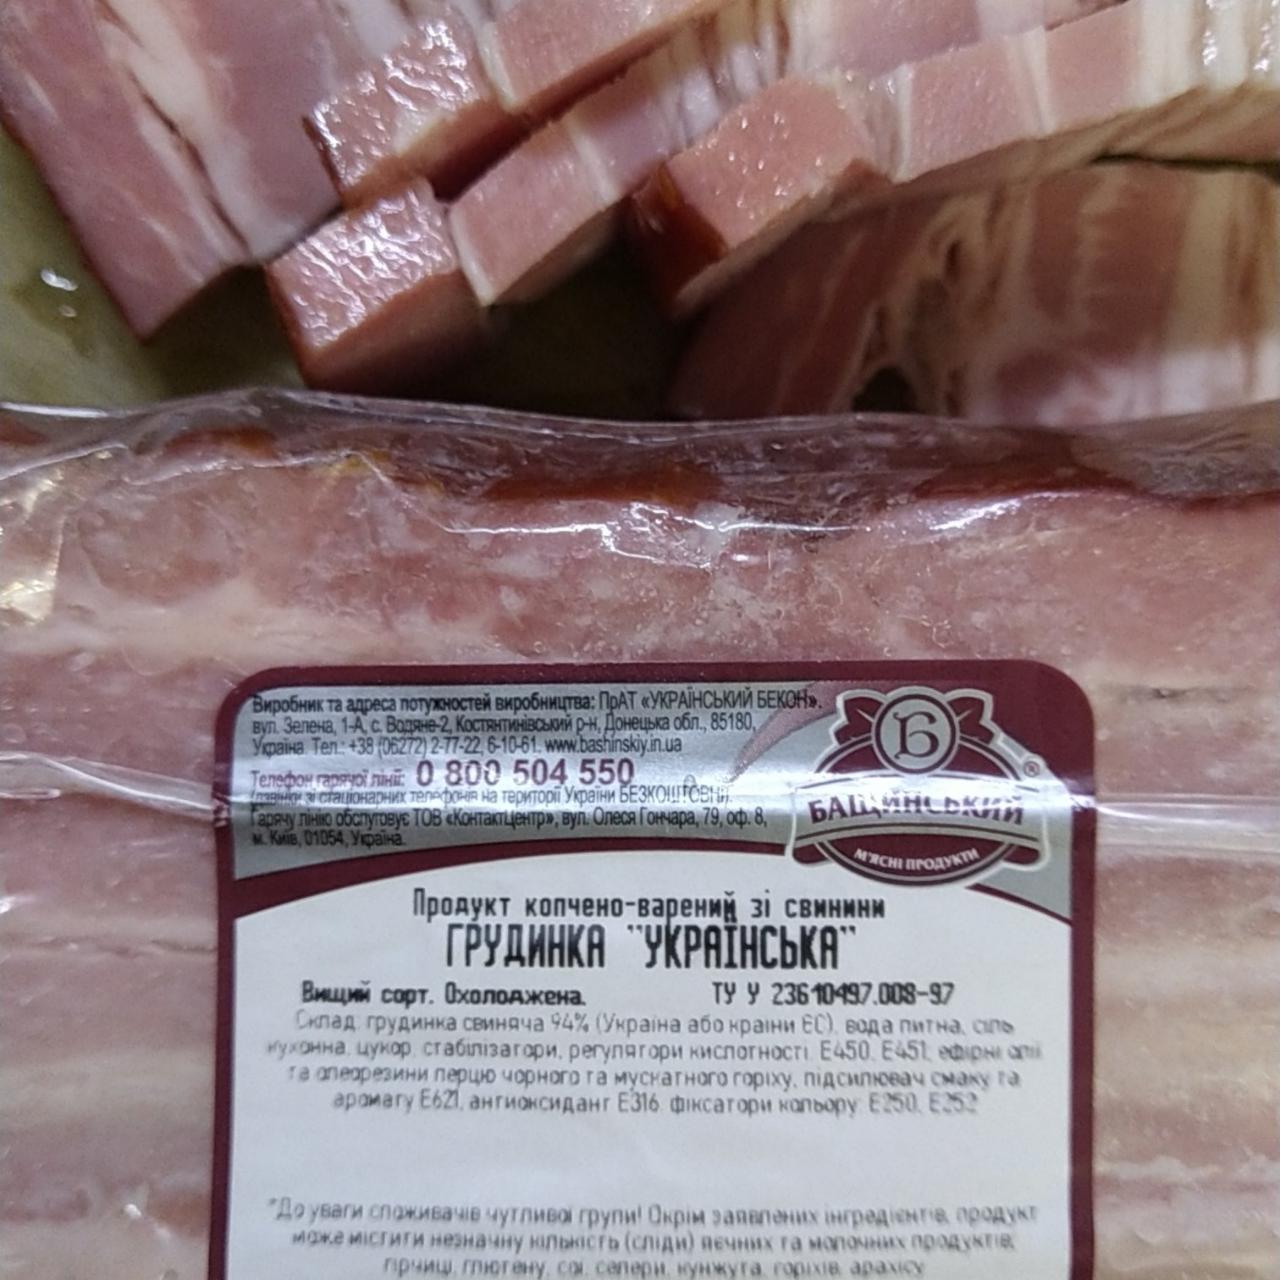 Familien-packung frische schweine minutensteaks цінність Metzgerfrisch ⋙TablycjaKalorijnosti - калорійність, харчова